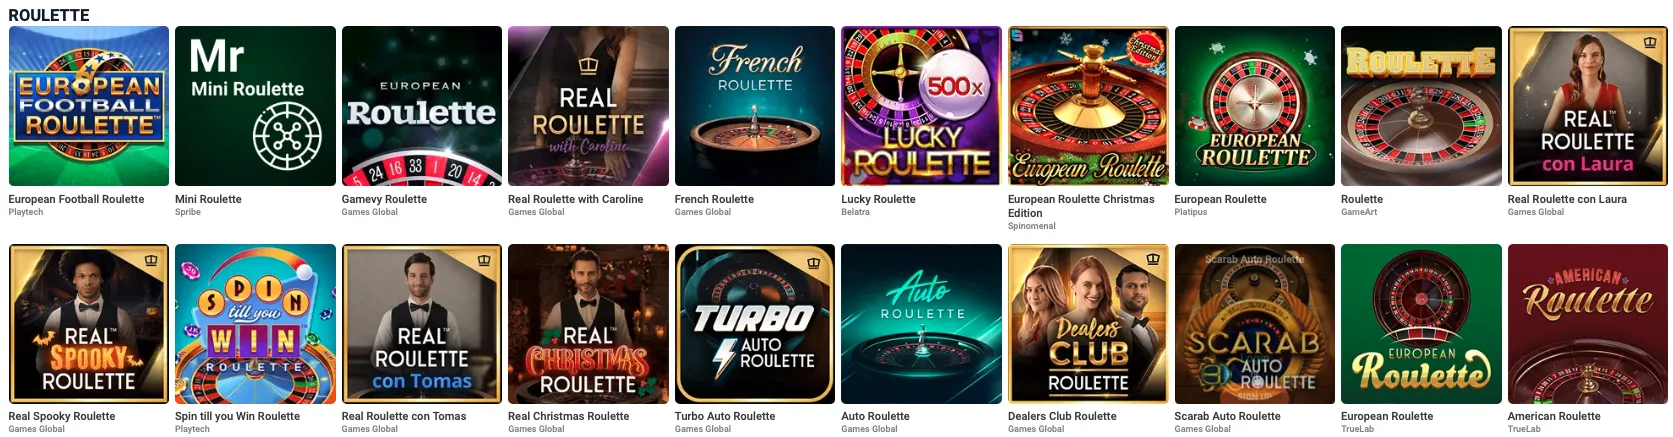 20Bet Casino Online Roulette